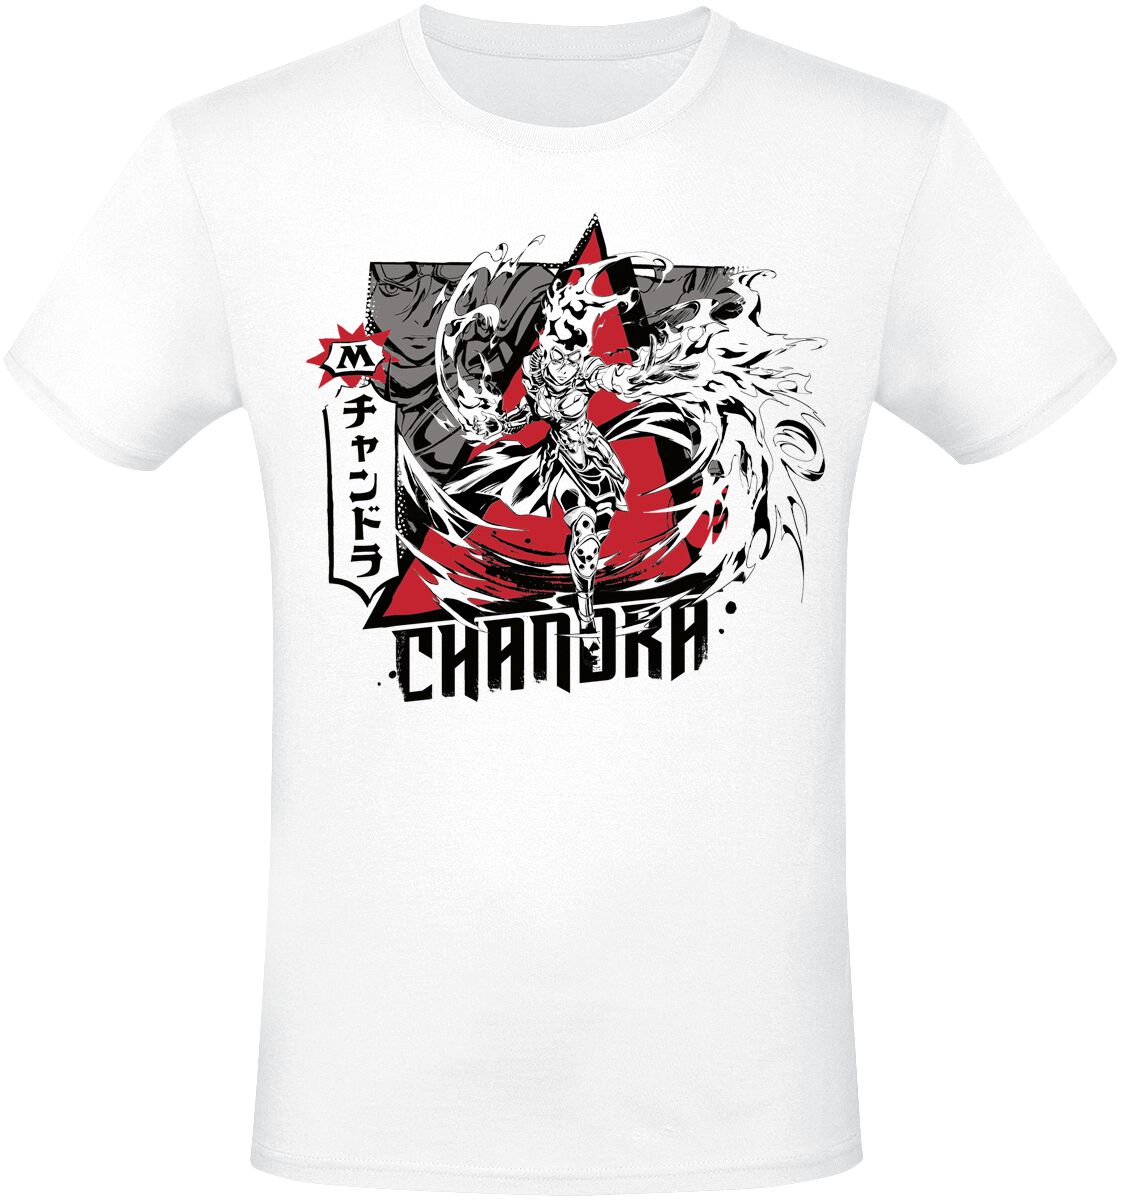 Magic: The Gathering Chandra T-Shirt weiß in L von Magic: The Gathering